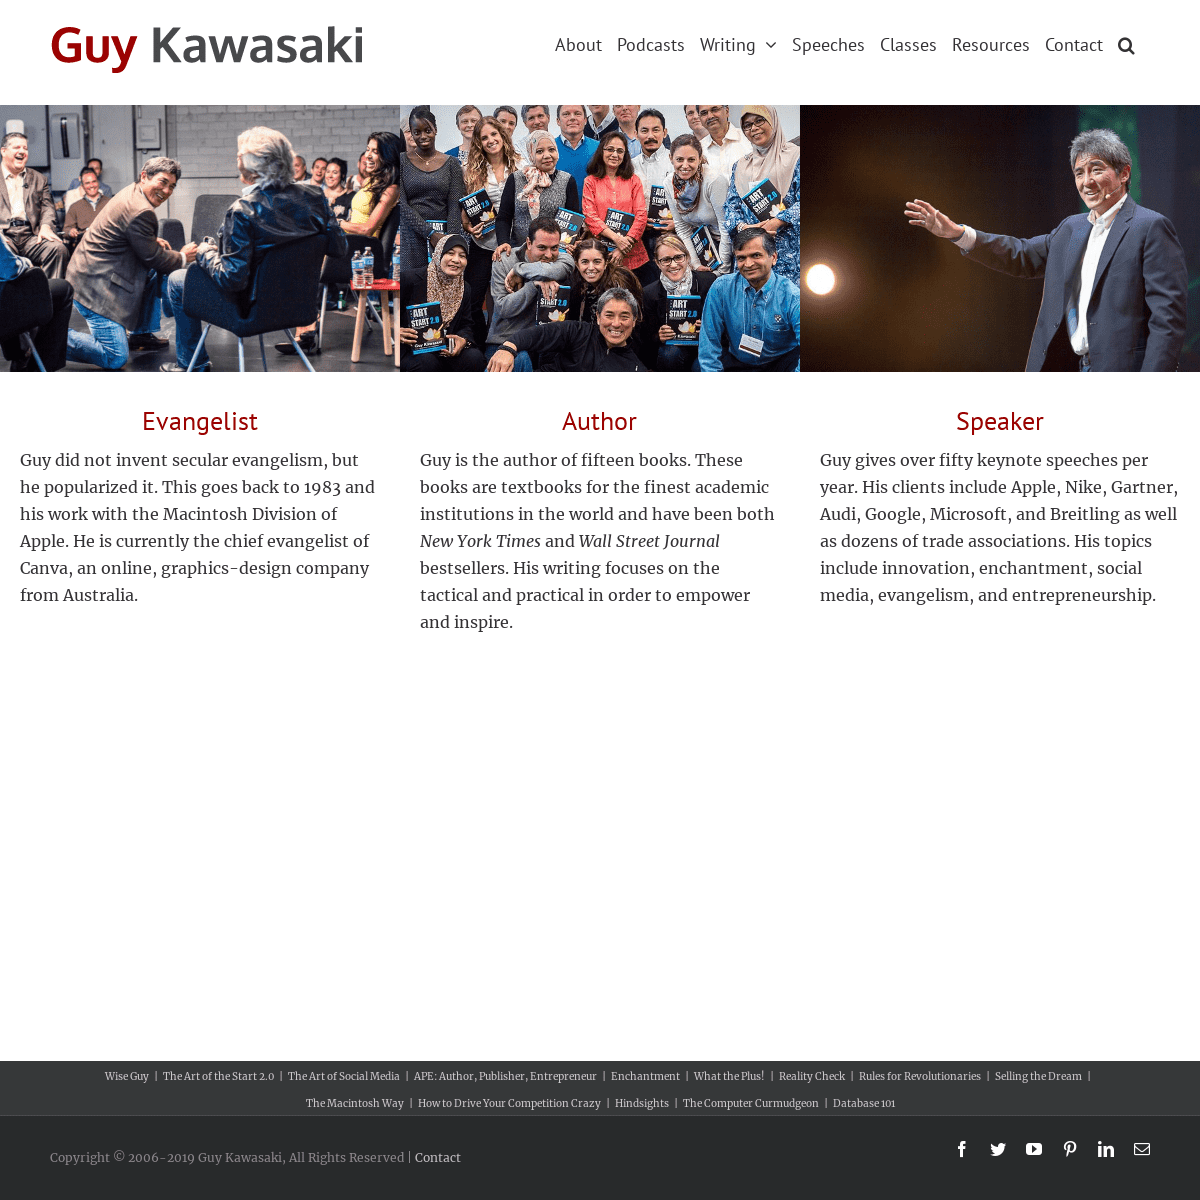 A complete backup of guykawasaki.com